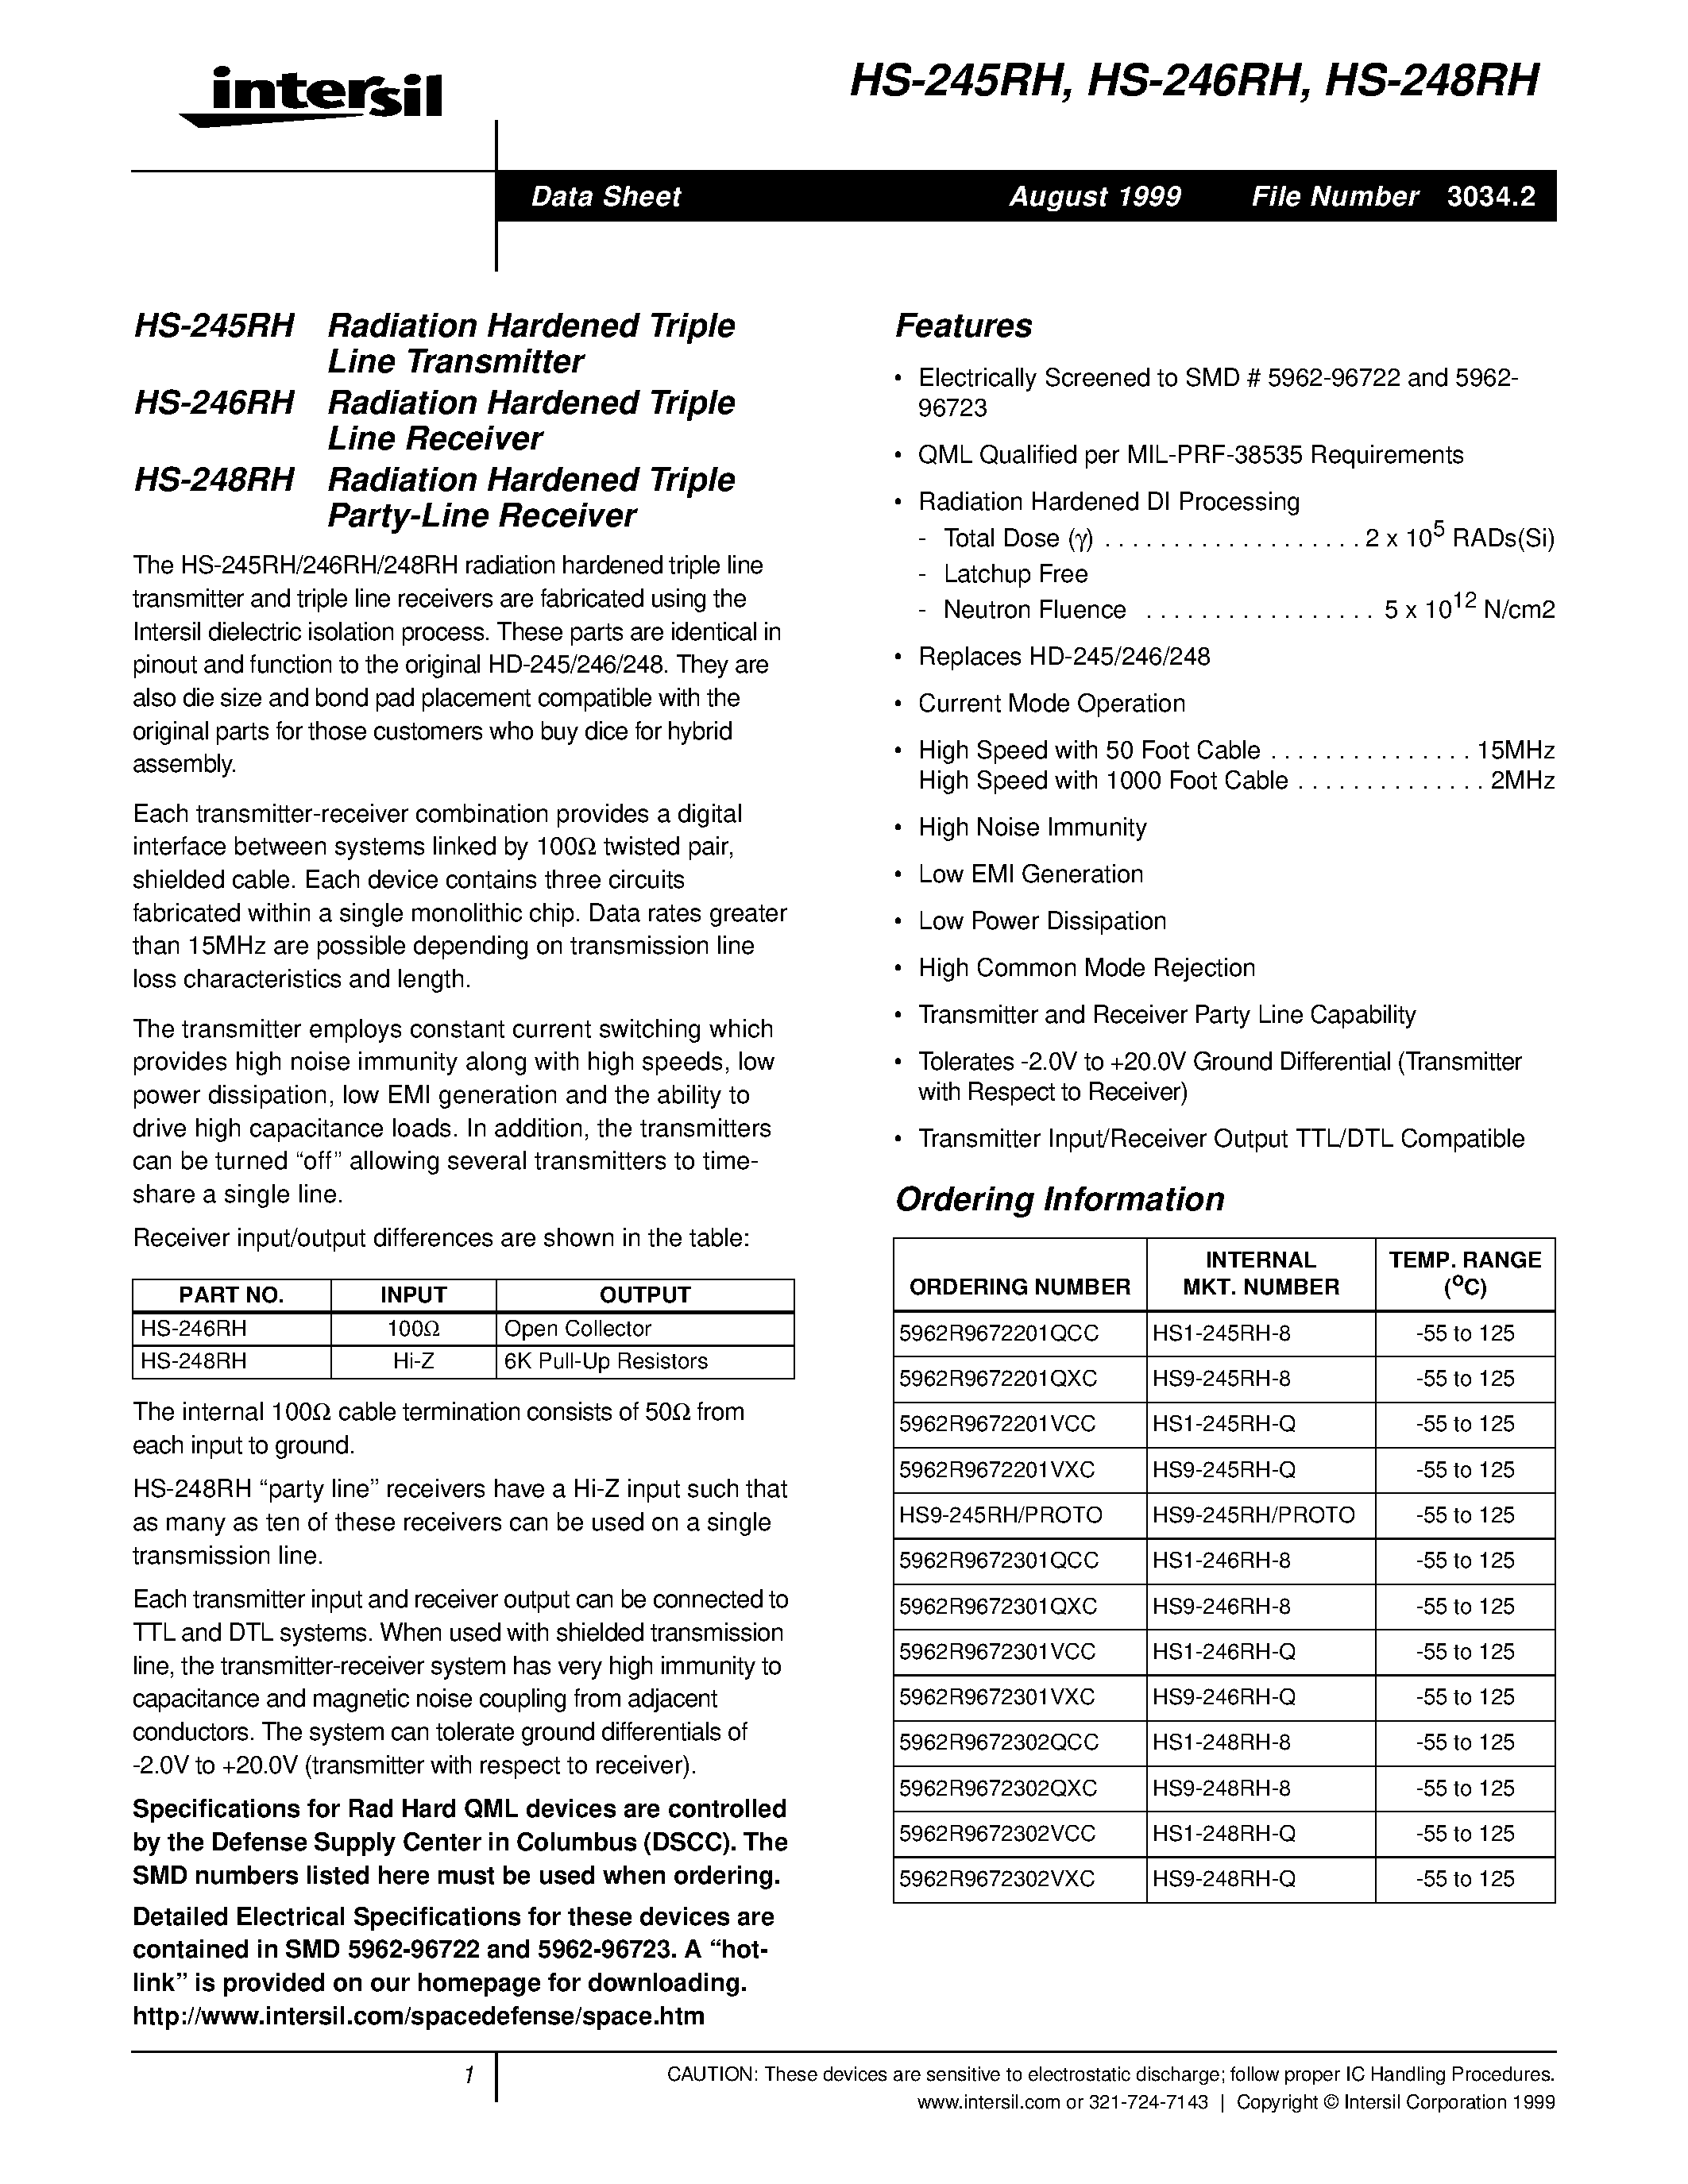 Даташит HS1-248RH-8 - Radiation Hardened Triple Line(party-Line) Transmitter страница 1